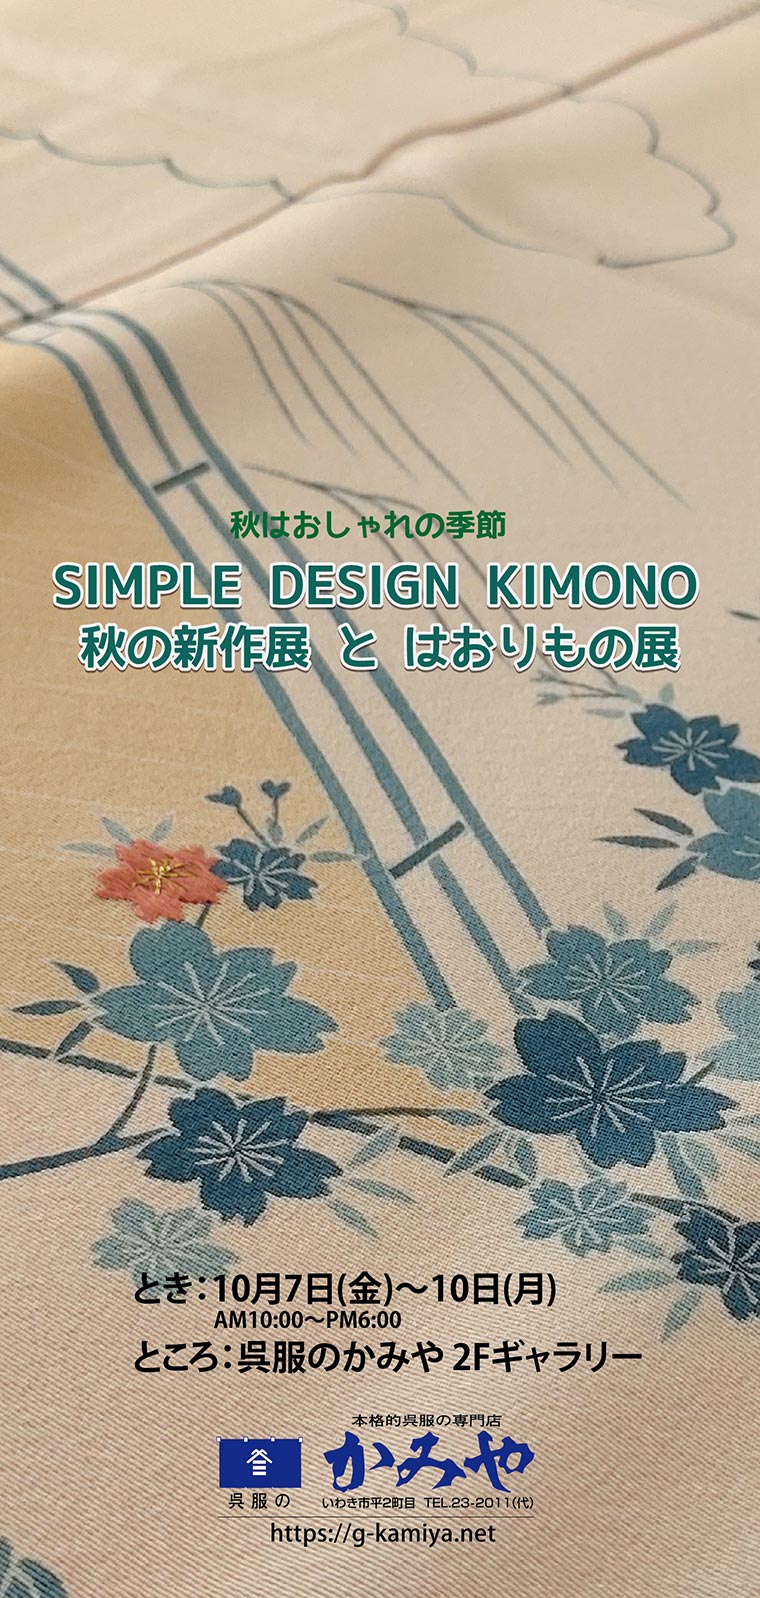 SIMPLE DESIGN KIMONO 秋の新作展